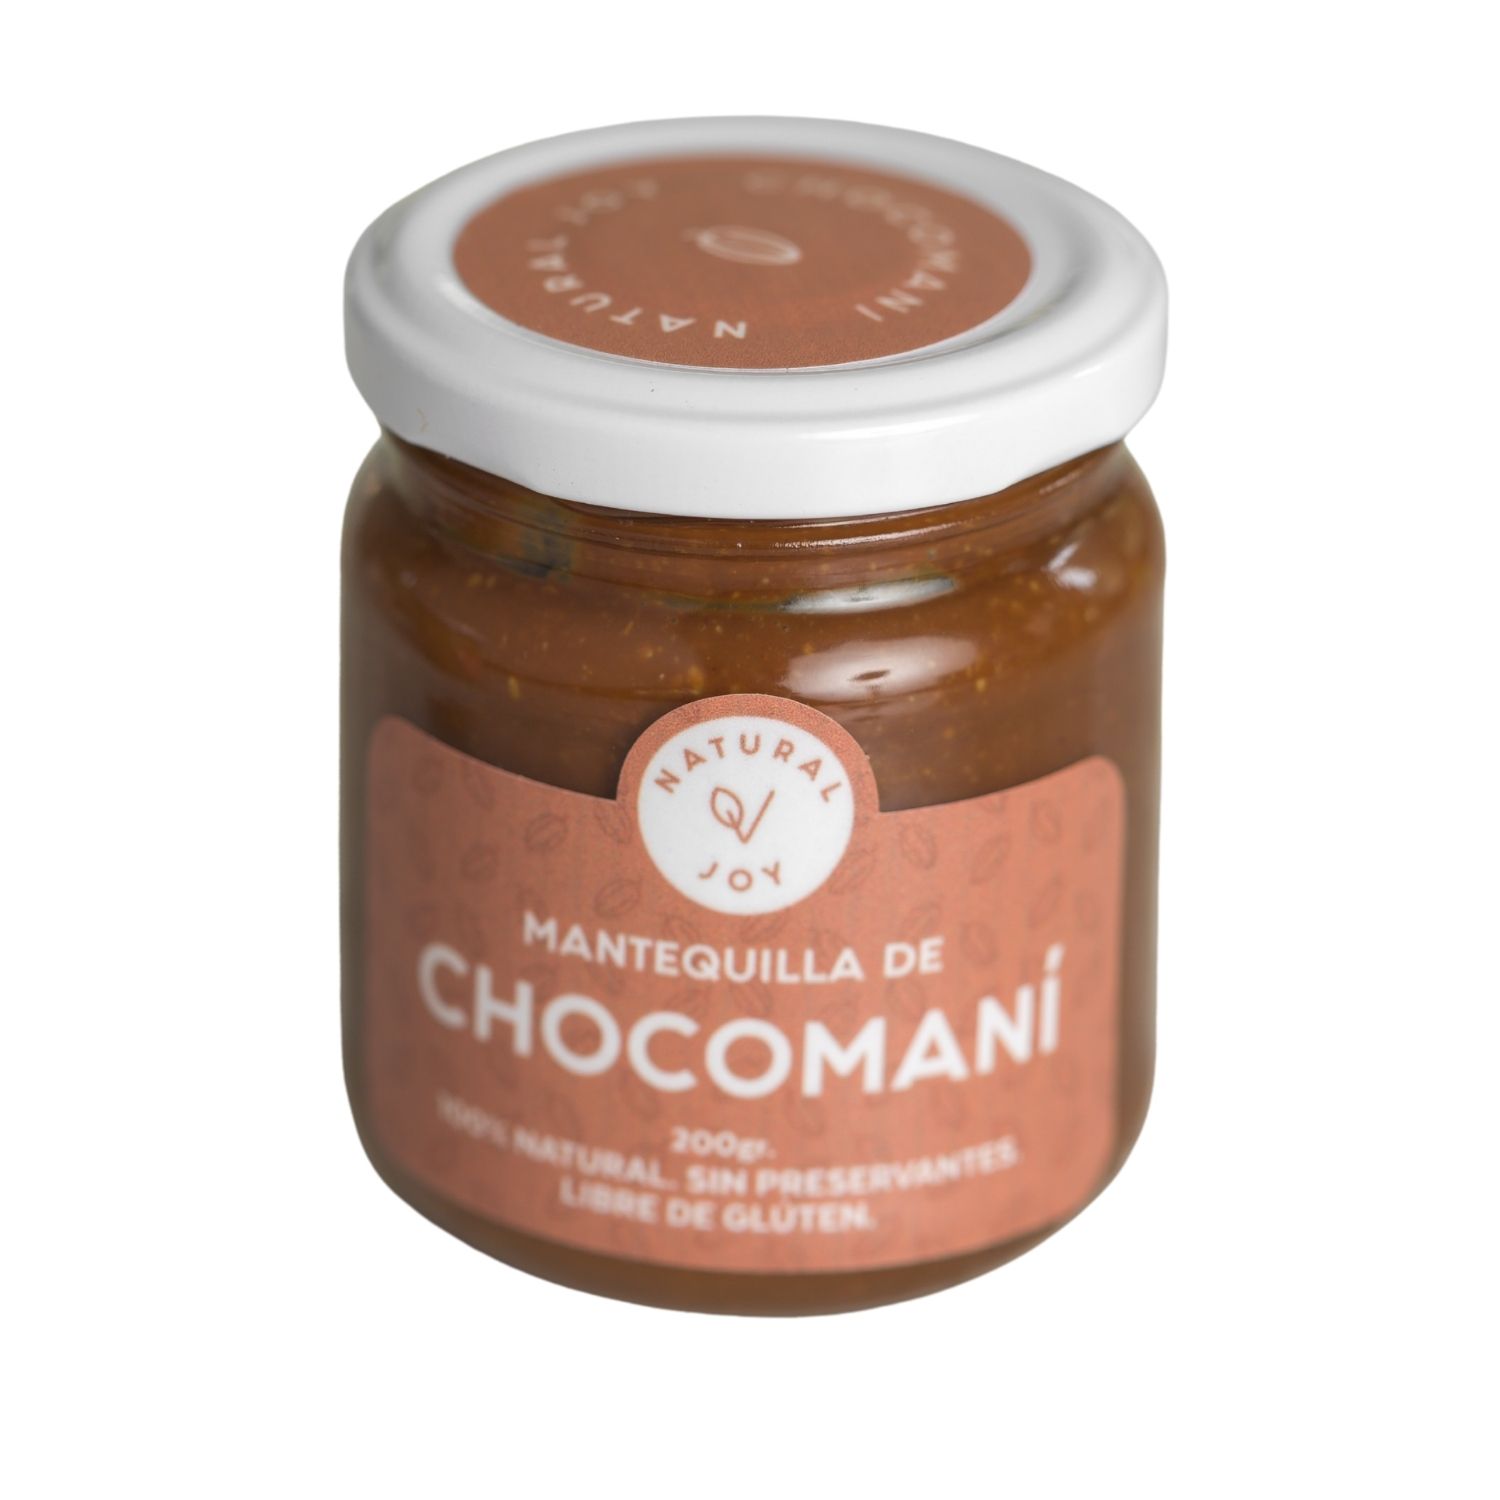 Mantequilla de Chocomani Natural Joy 200gr